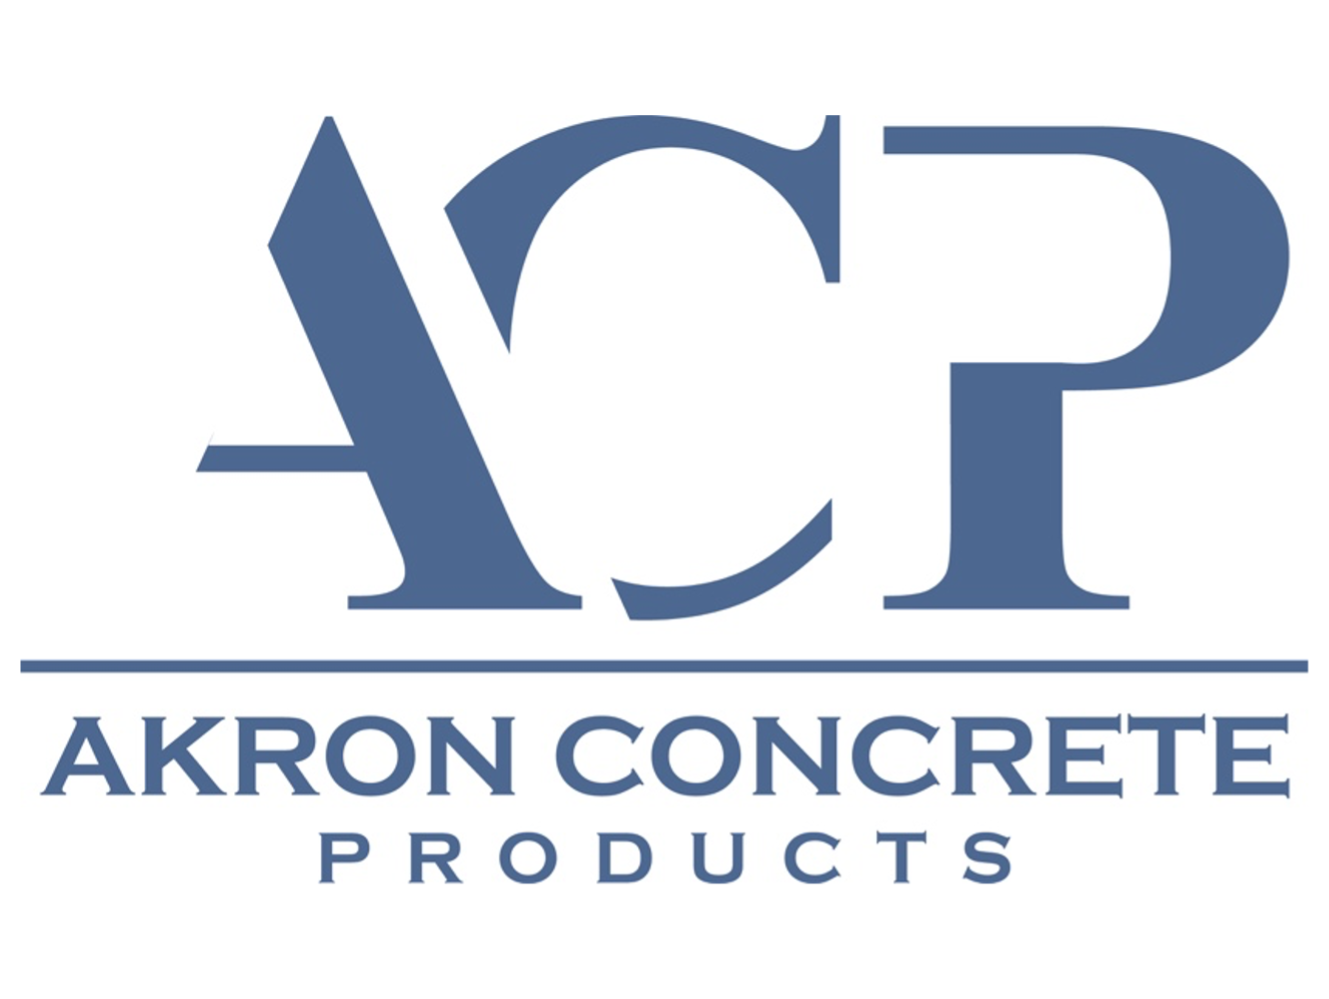 Akron Concrete Products